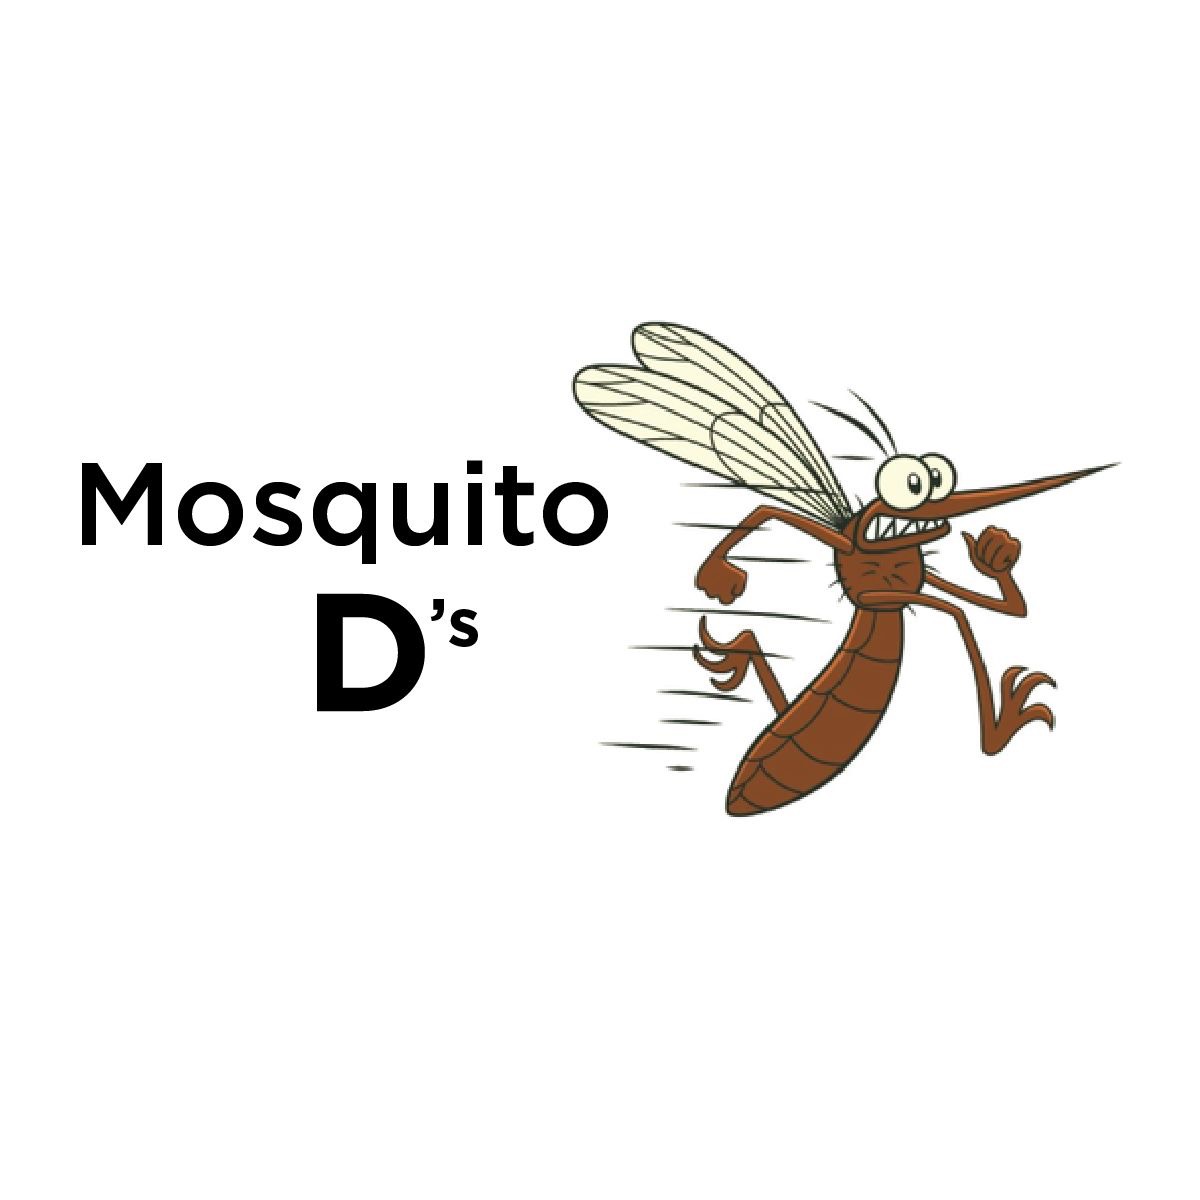 Mosquito D’s Browns Summit North Carolina 